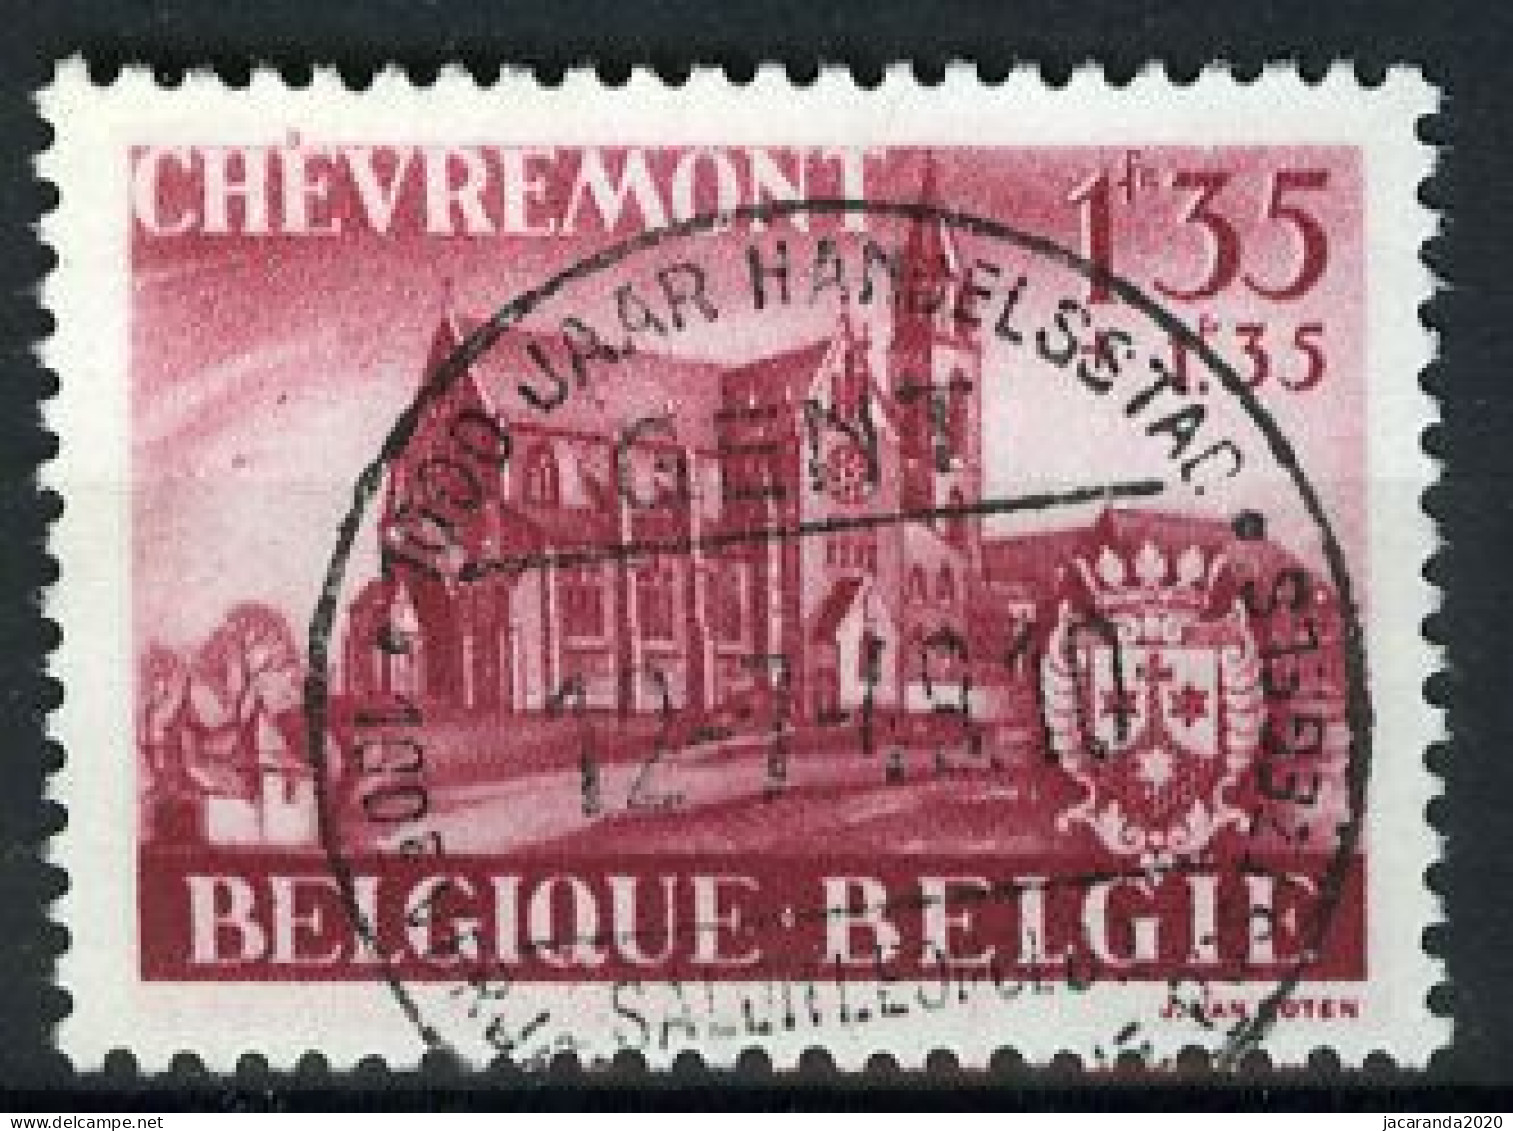 België 778 - Abdij Van Chèvremont - Gestempeld - Oblitéré - Used - Gebraucht